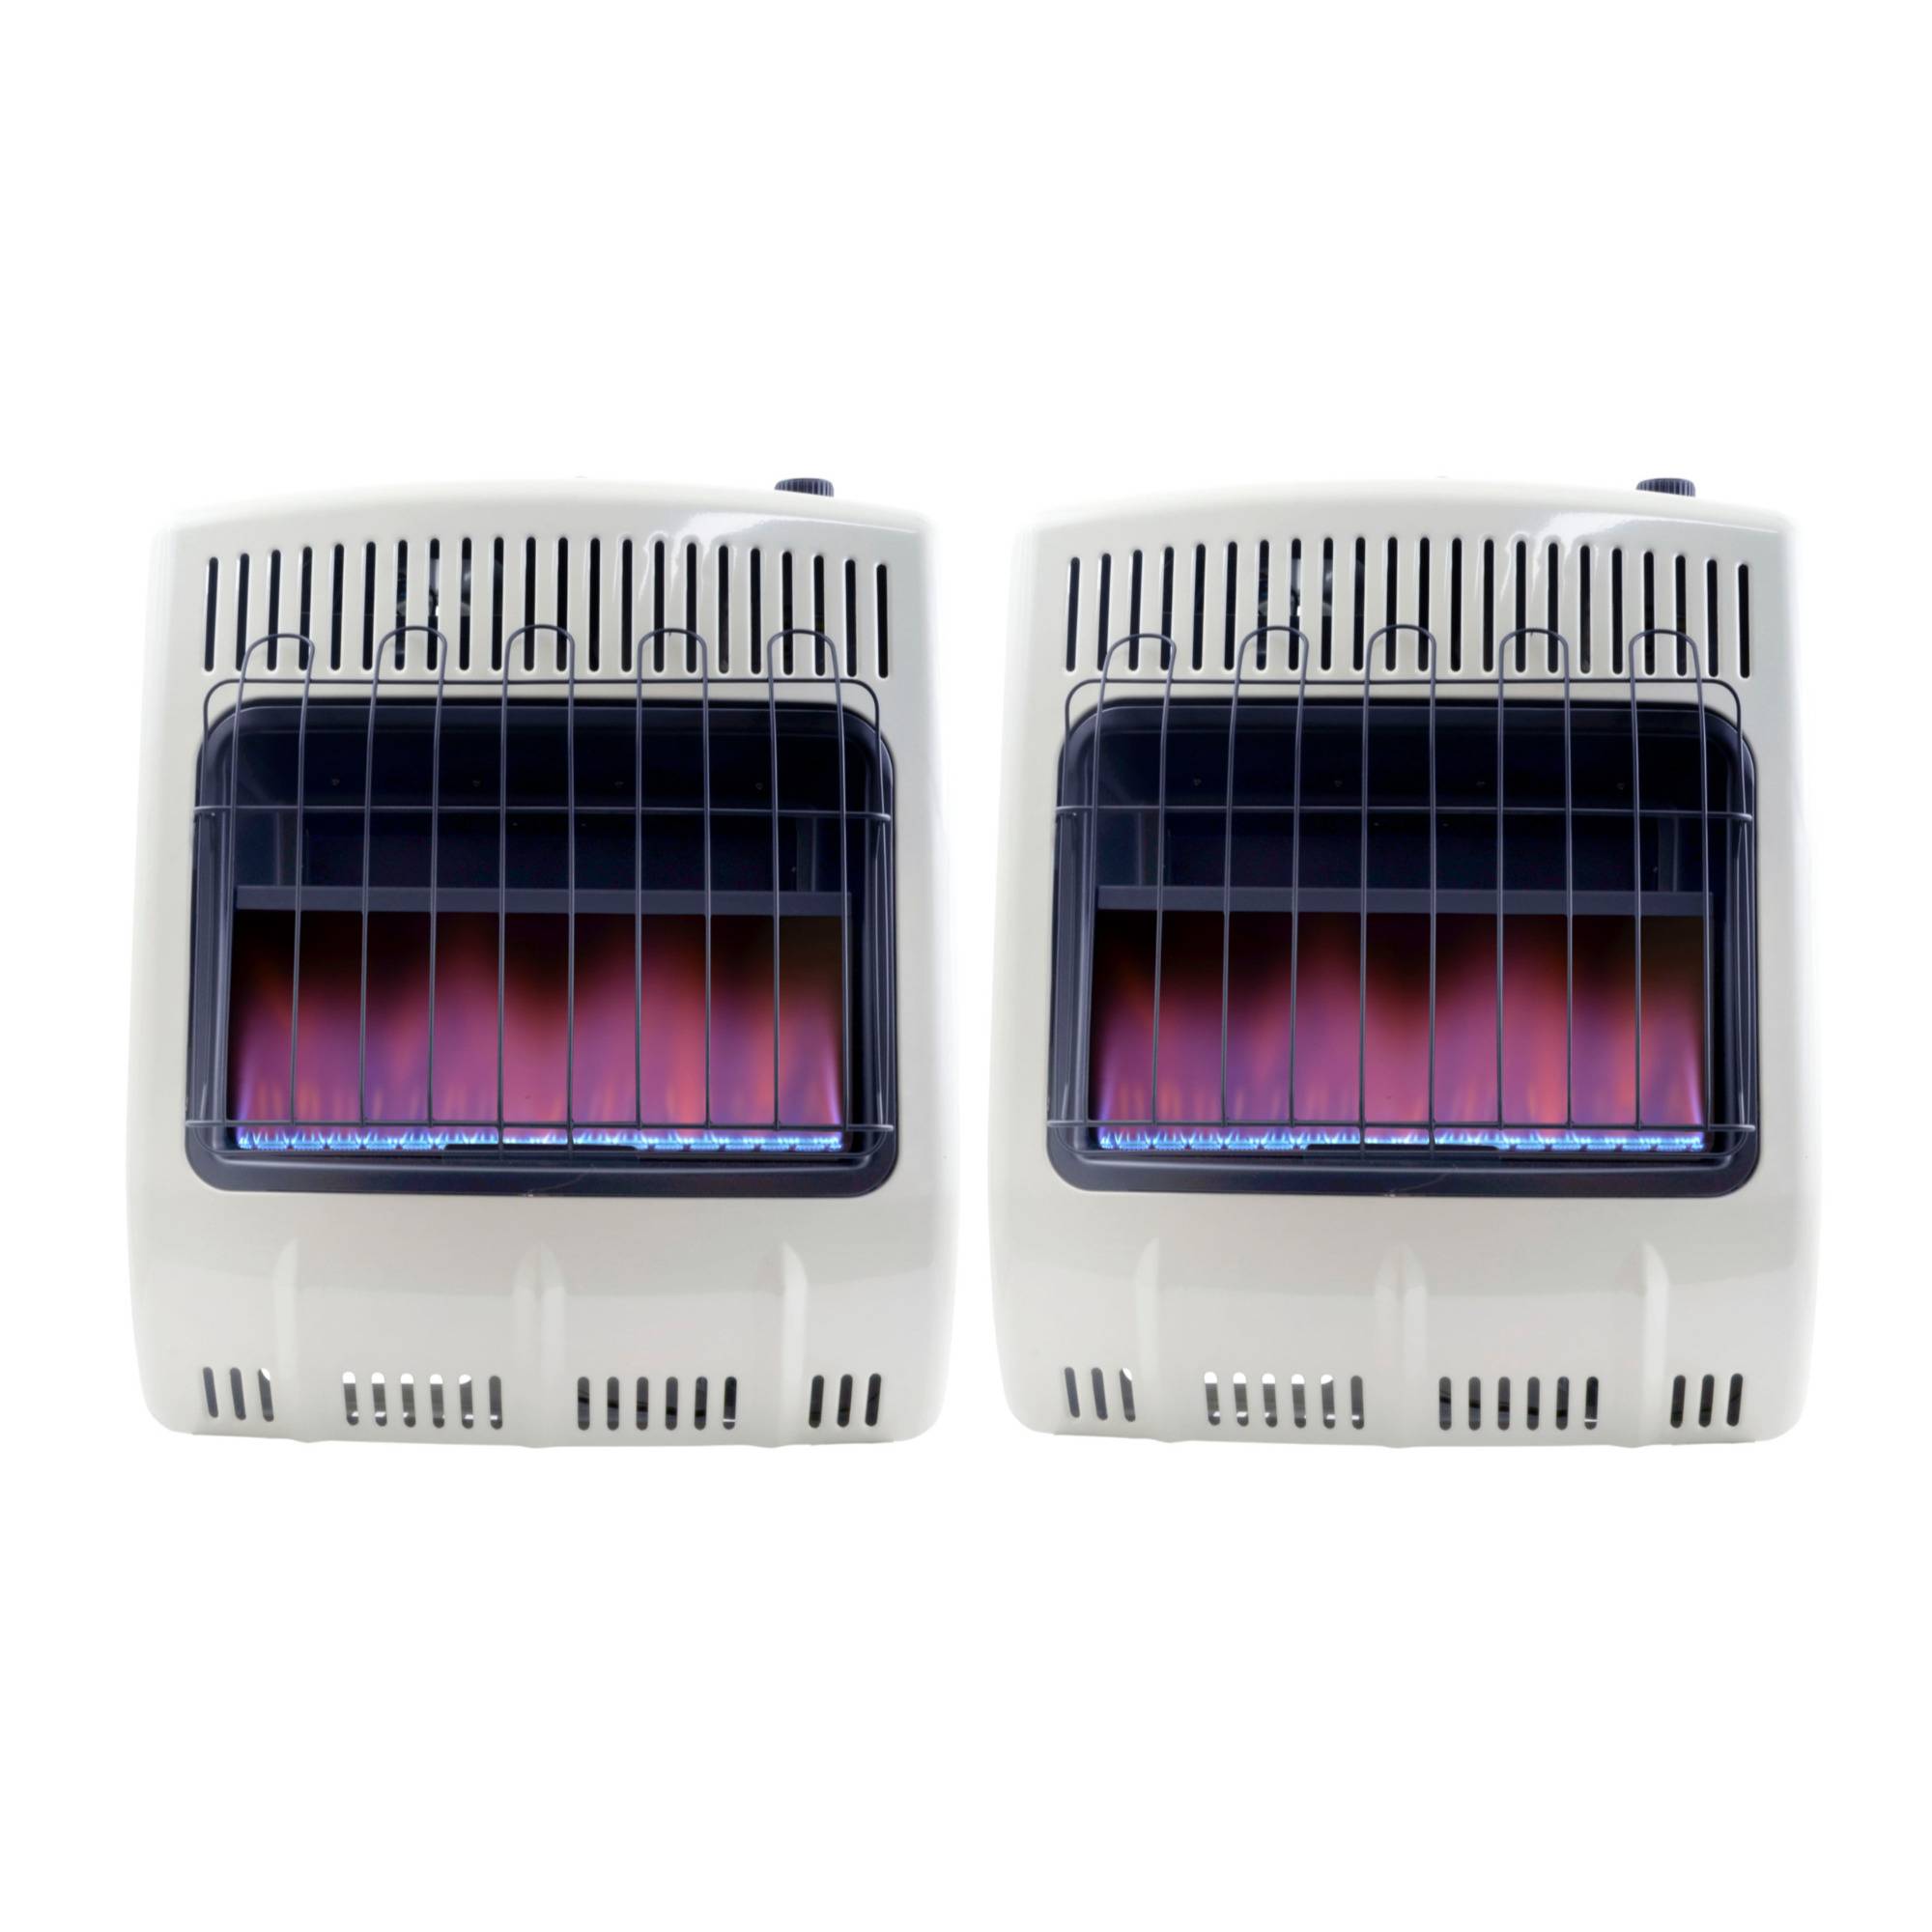 Mr. Heater 20000 BTU Vent Free Blue Flame Propane Gas Indoor Heater (2-Pack)